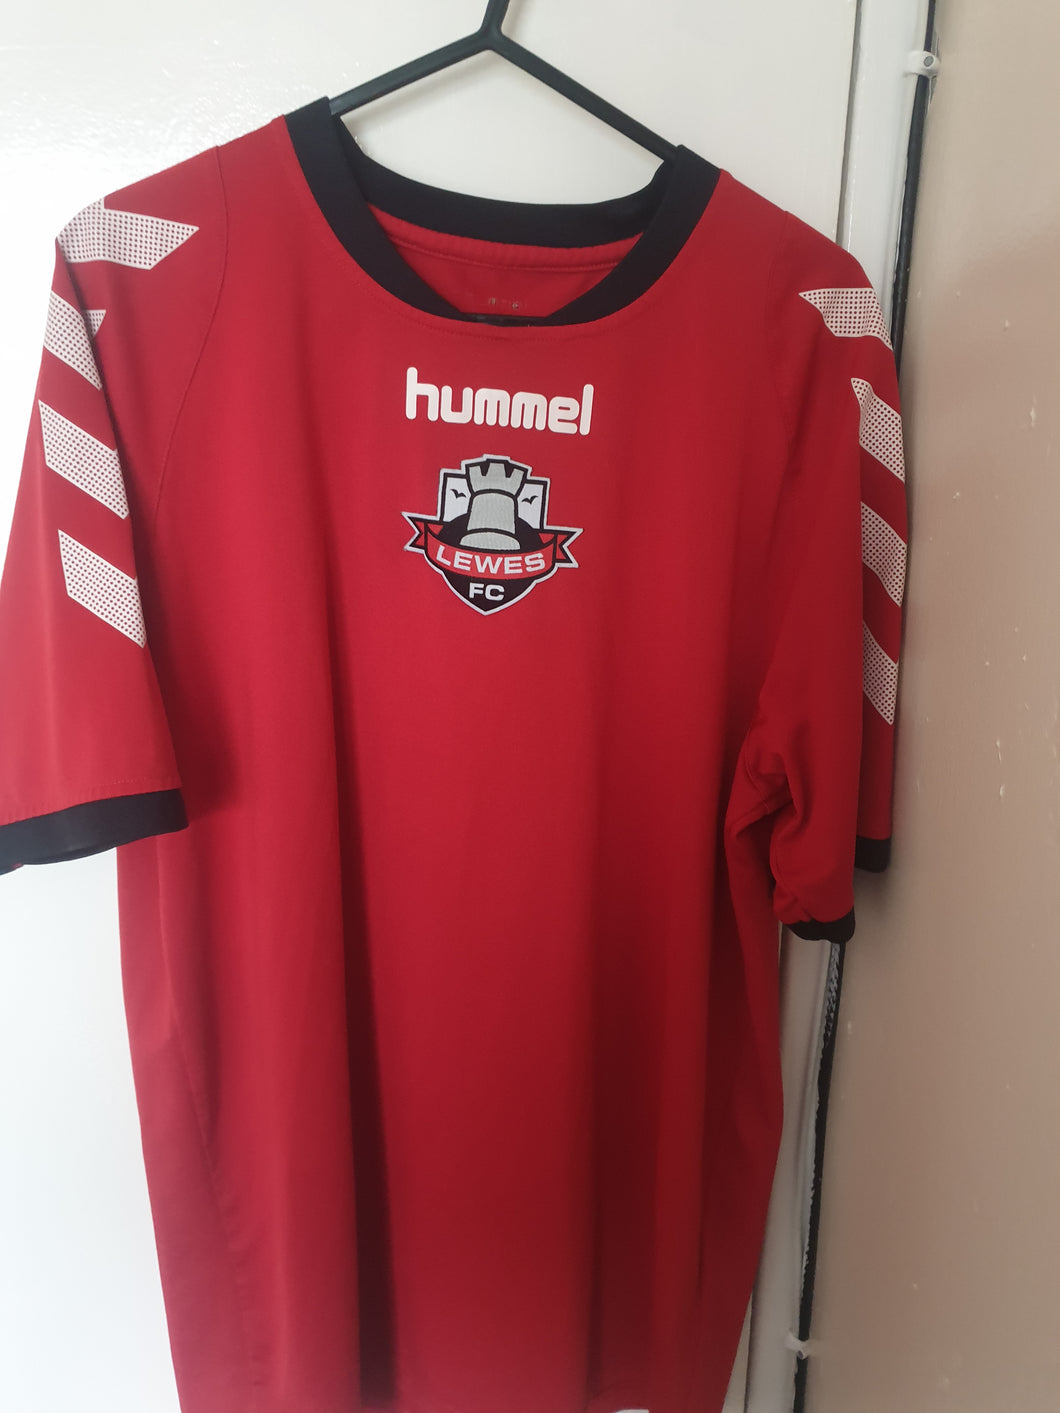 Lewes Fc Training Football Shirt Hummel (Size Medium)